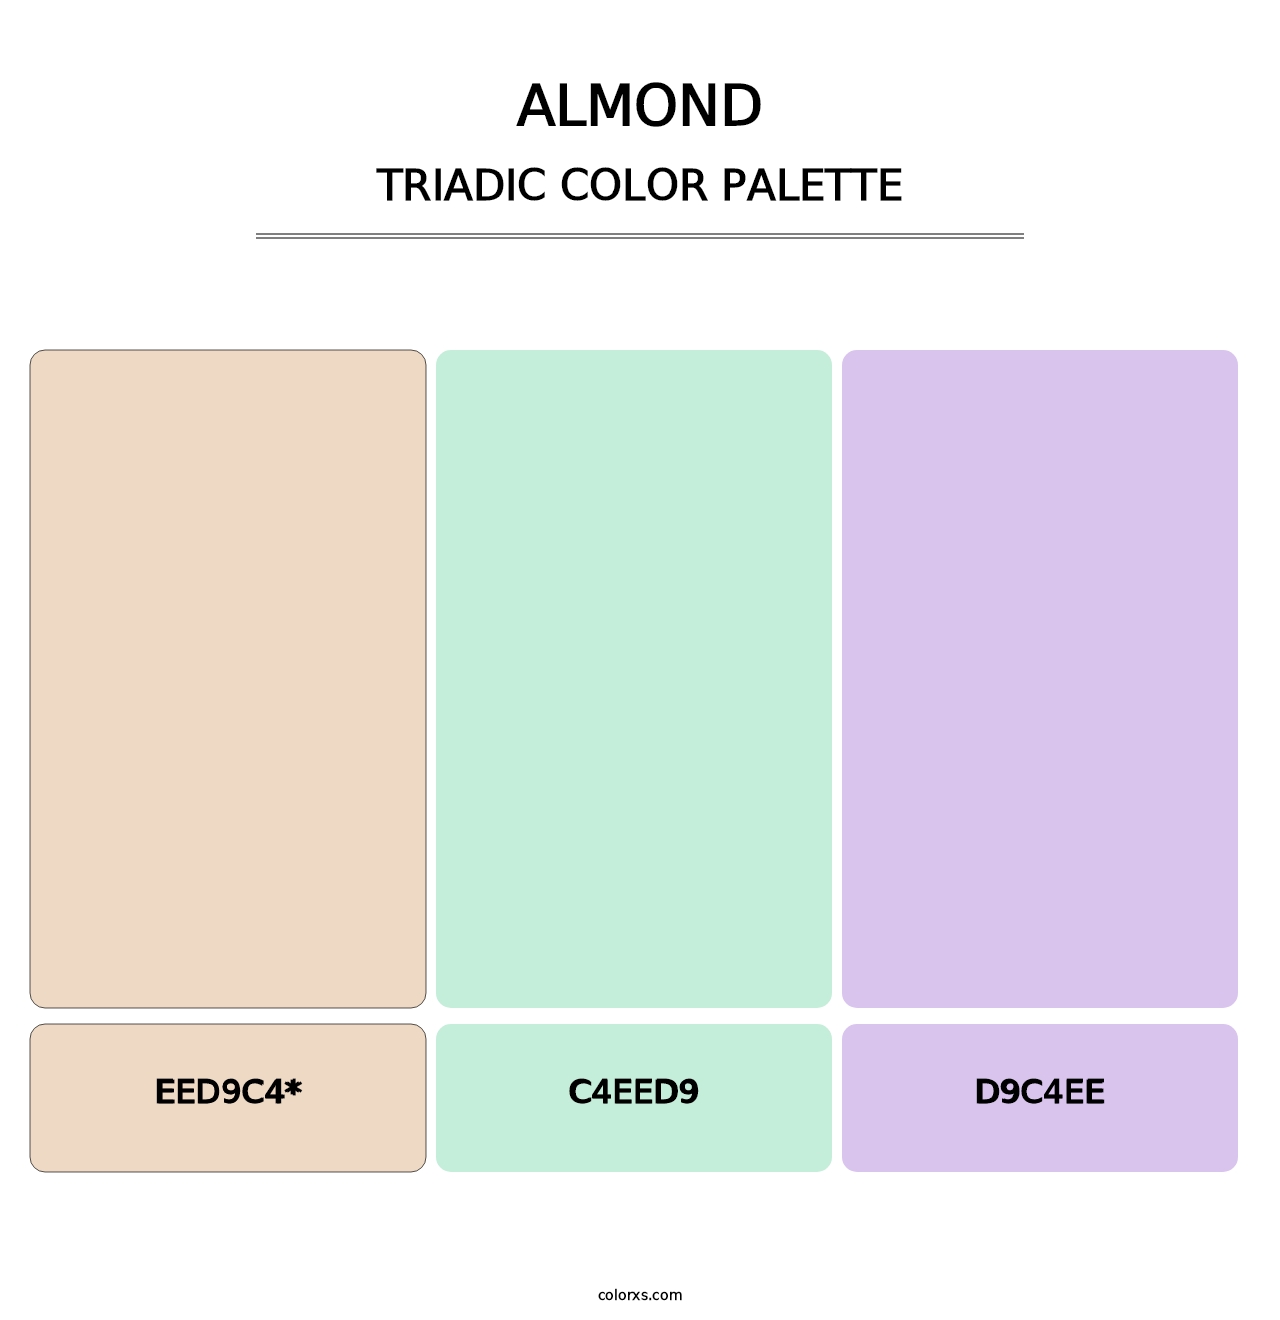 Almond - Triadic Color Palette